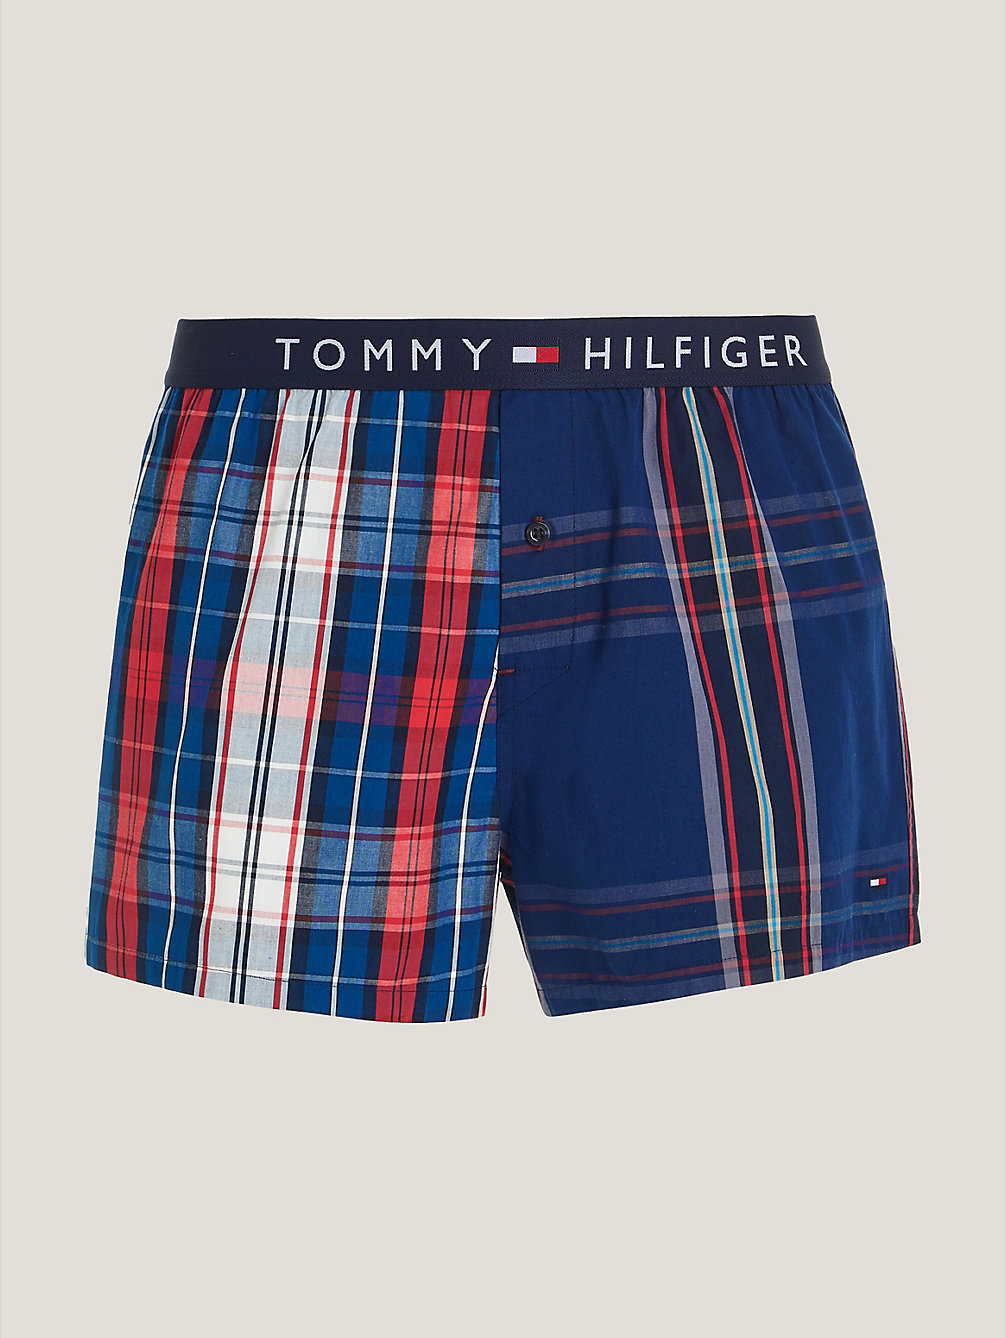 black th original logo woven boxer shorts for men tommy hilfiger